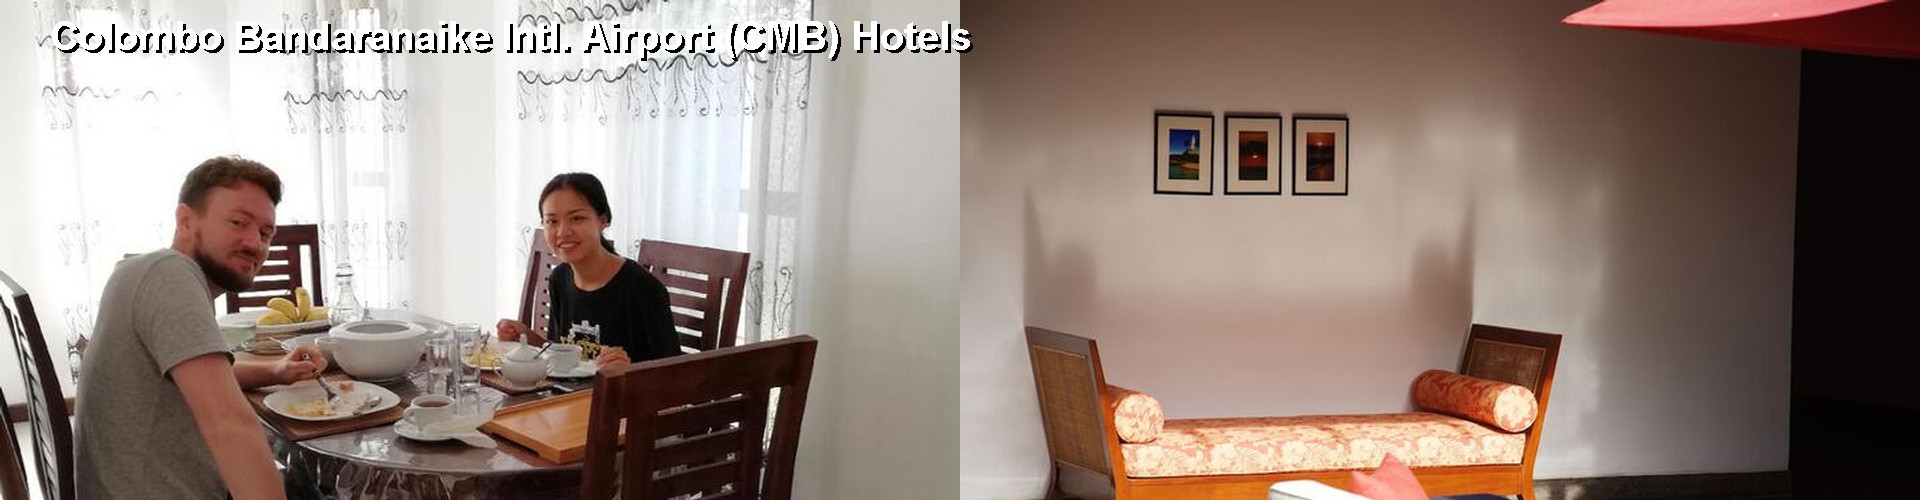 5 Best Hotels near Colombo Bandaranaike Intl. Airport (CMB)